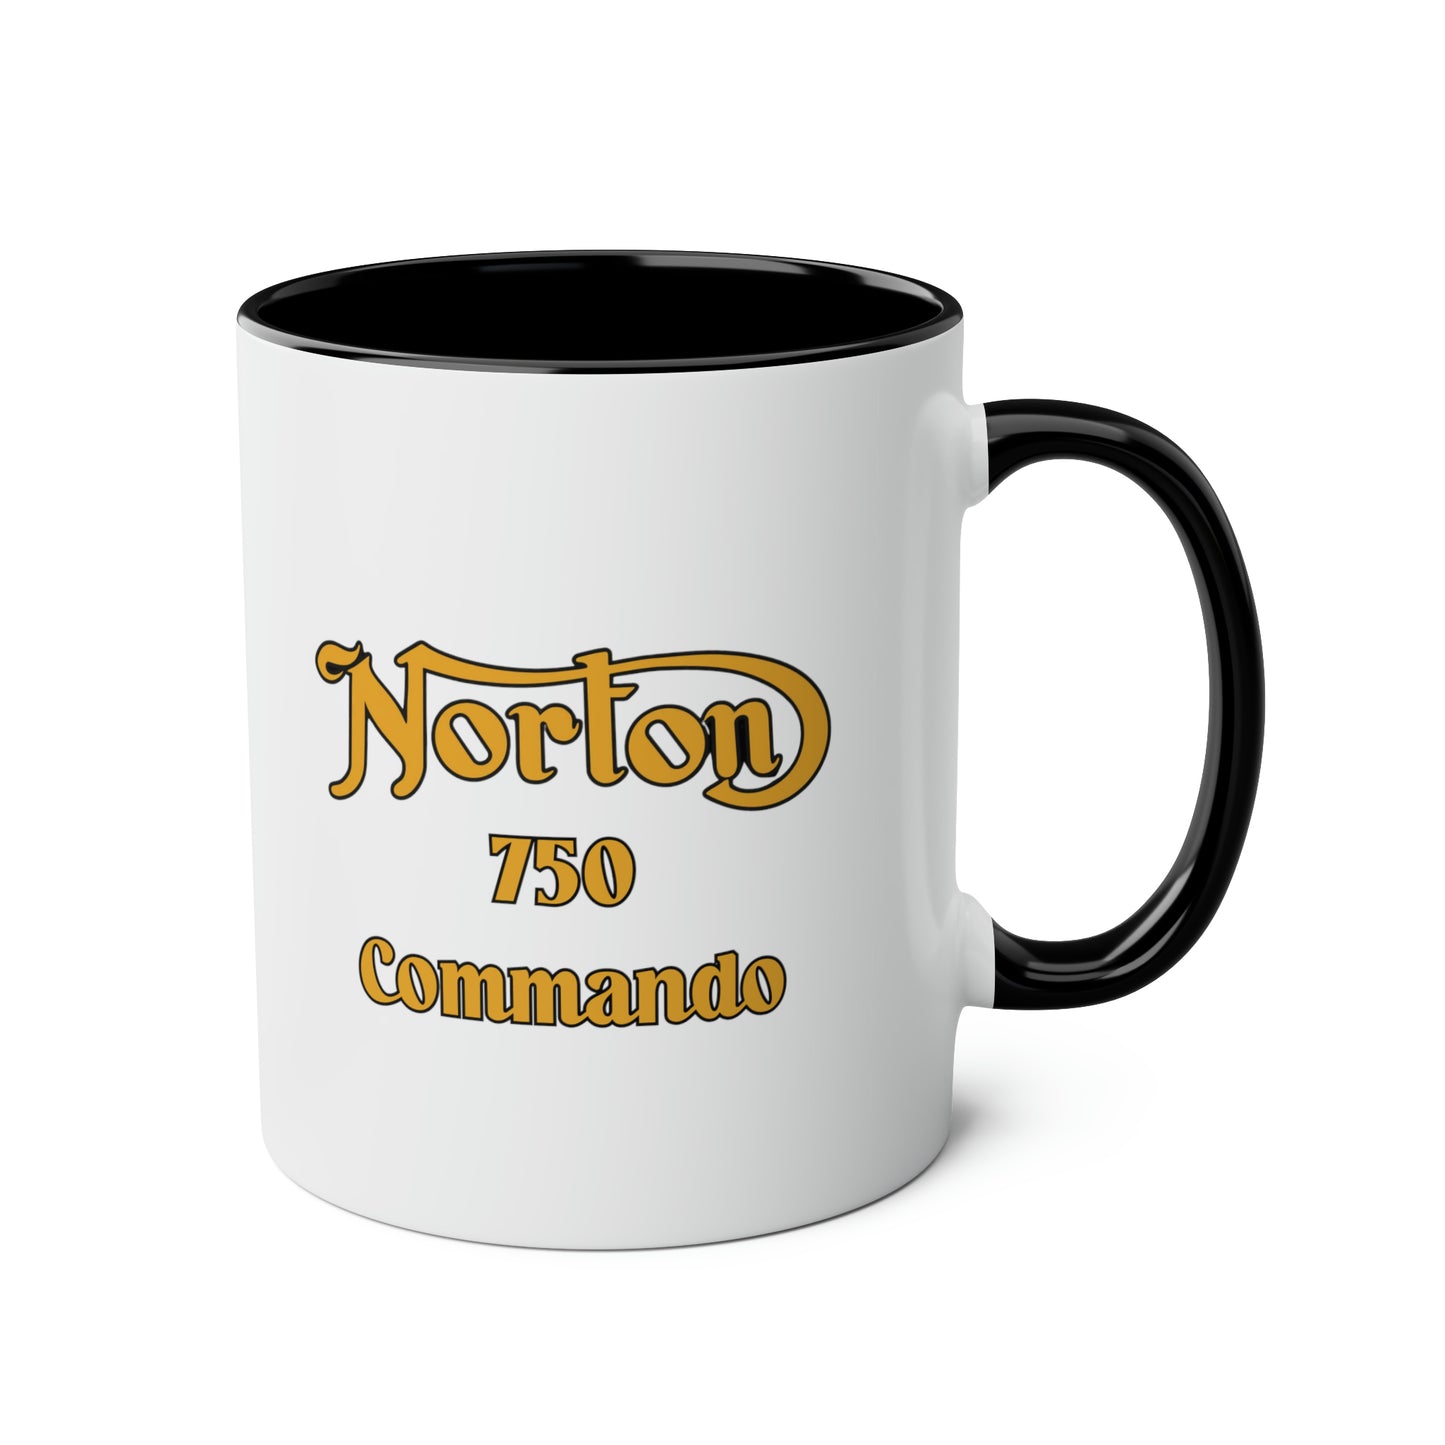 Norton Commando 750 Two-Tone Coffee Mugs, 11oz